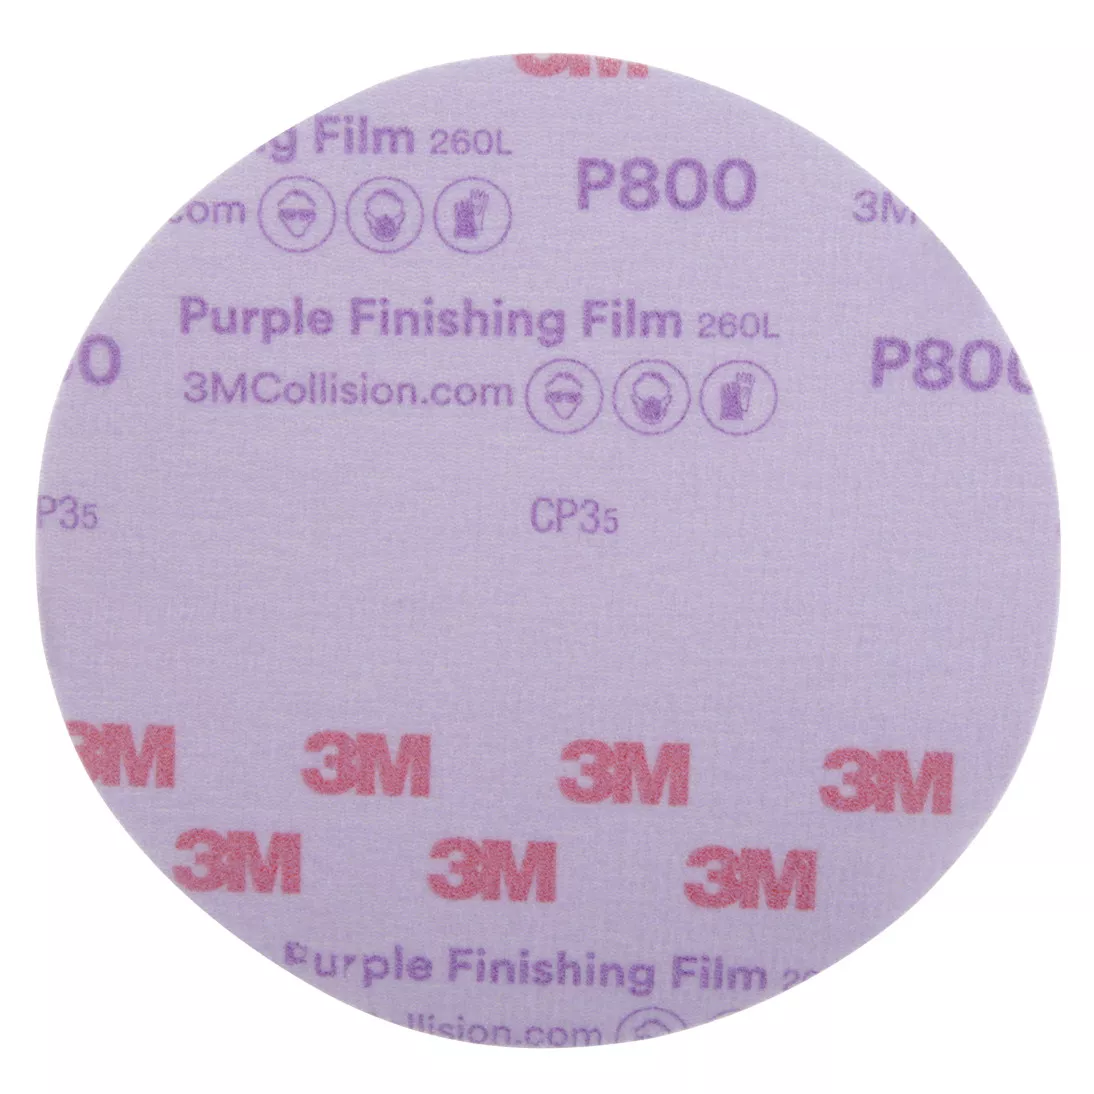 3M™ Hookit™ Purple Finishing Film Abrasive Disc 260L, 30670, 6 in, P800,
50 discs per carton, 4 cartons per case